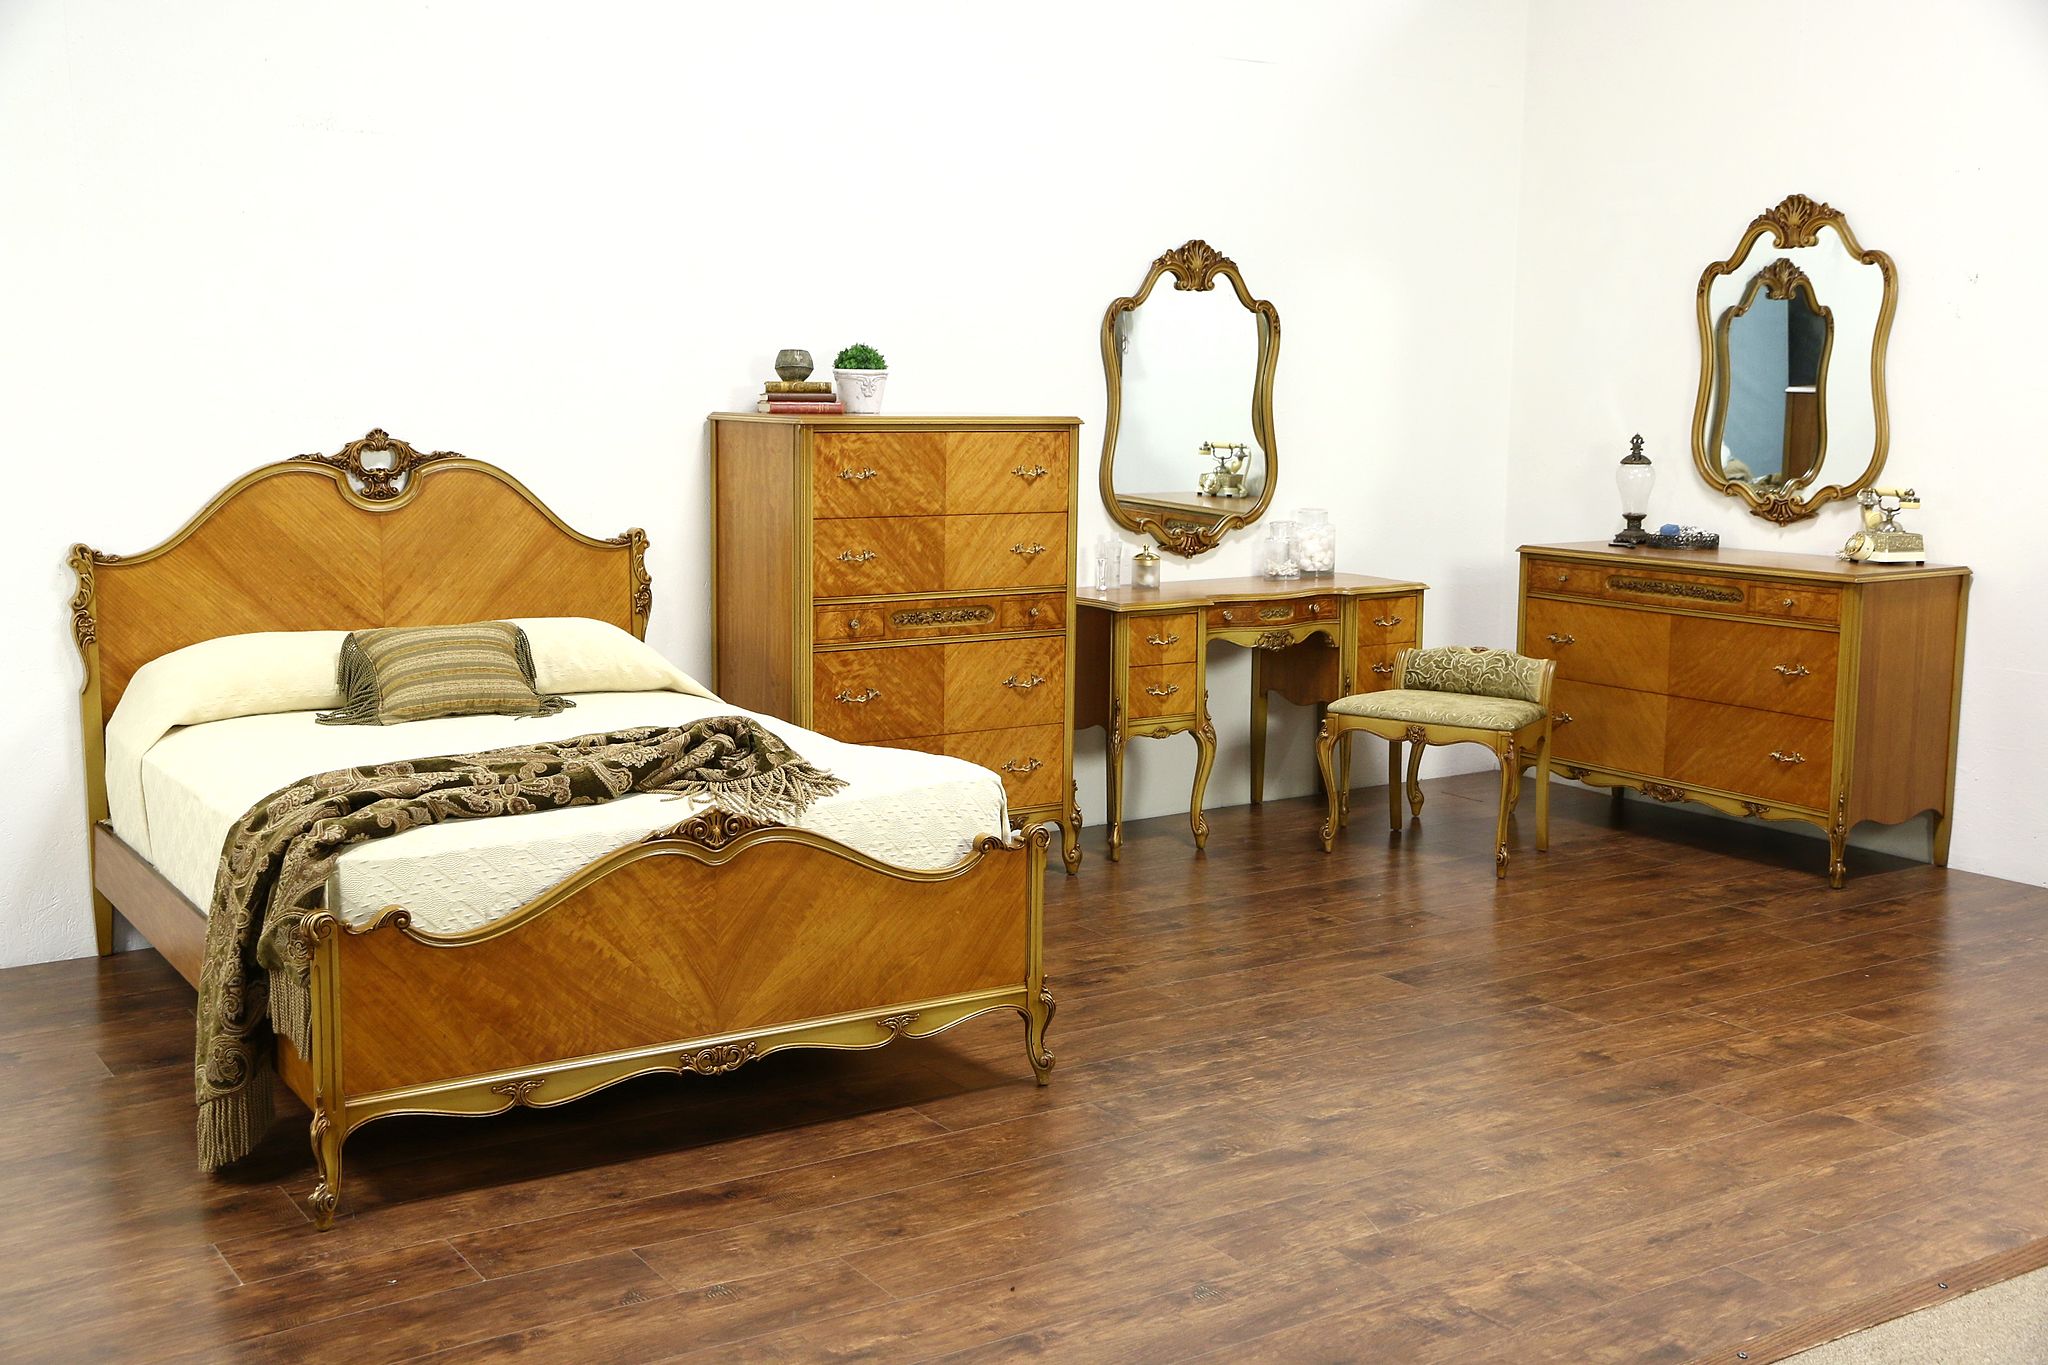 1940s bedroom furniture oak